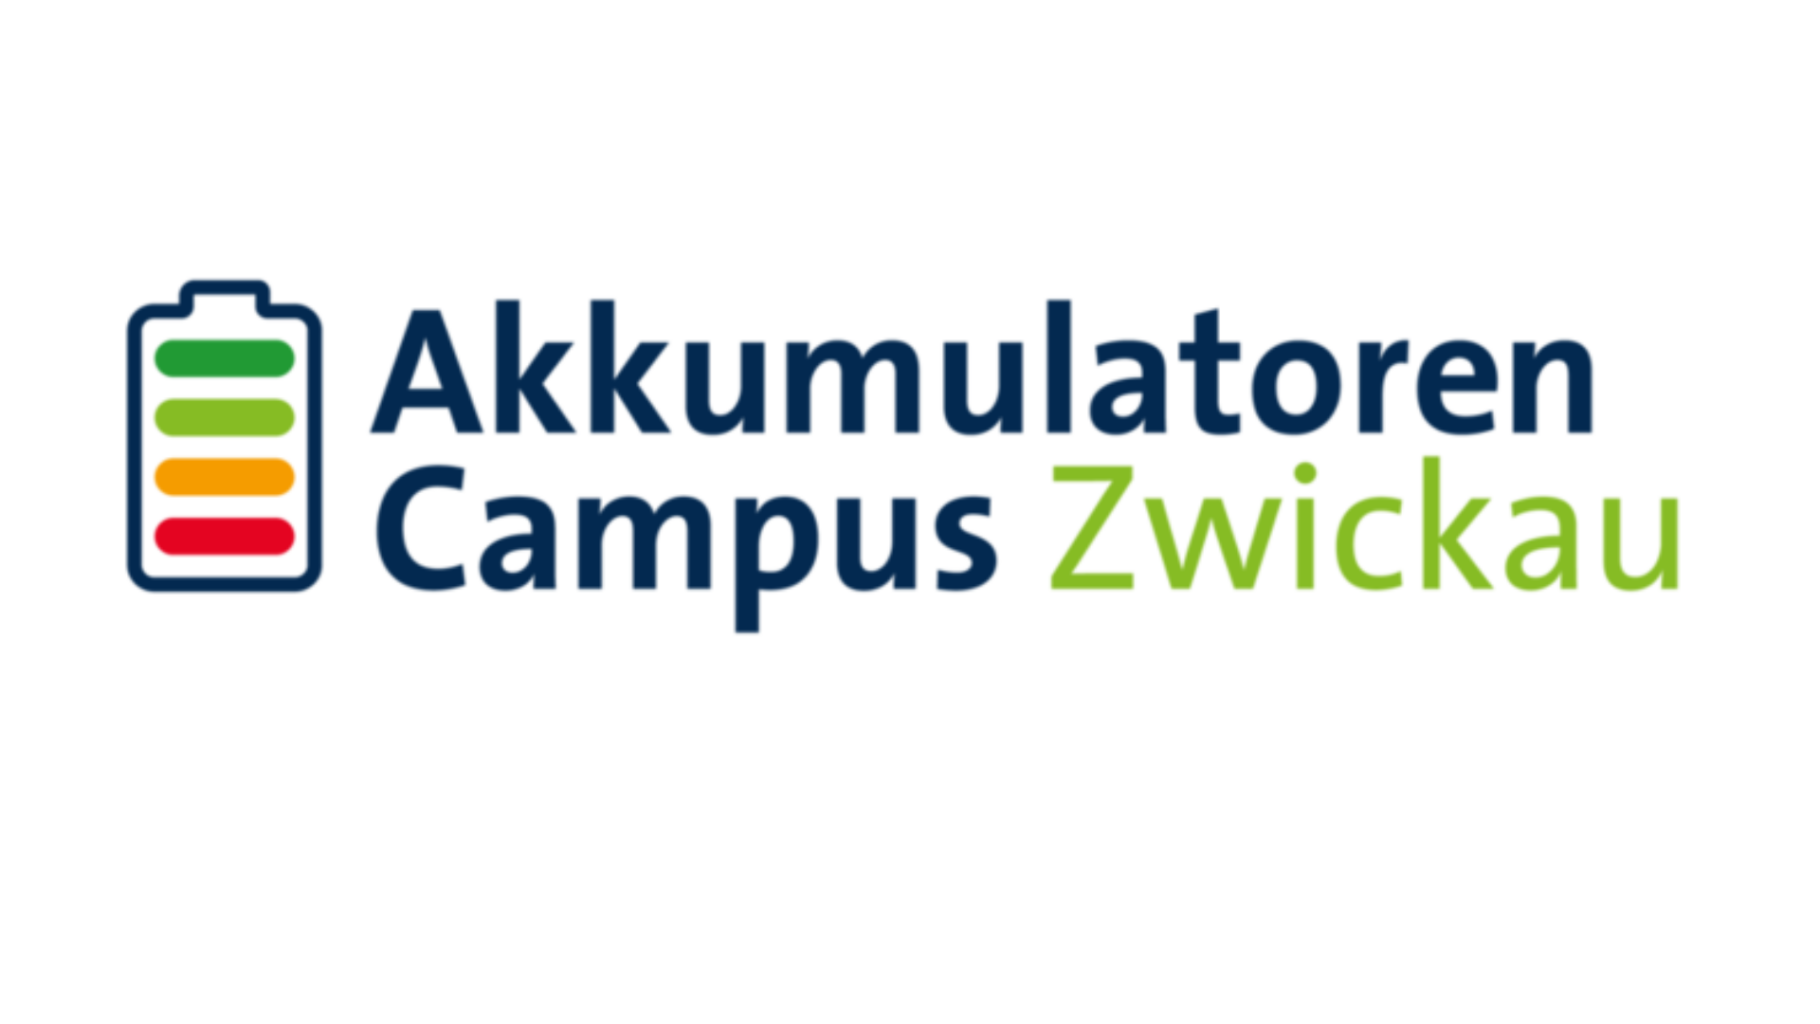 Akkumulatorencampus Zwickau